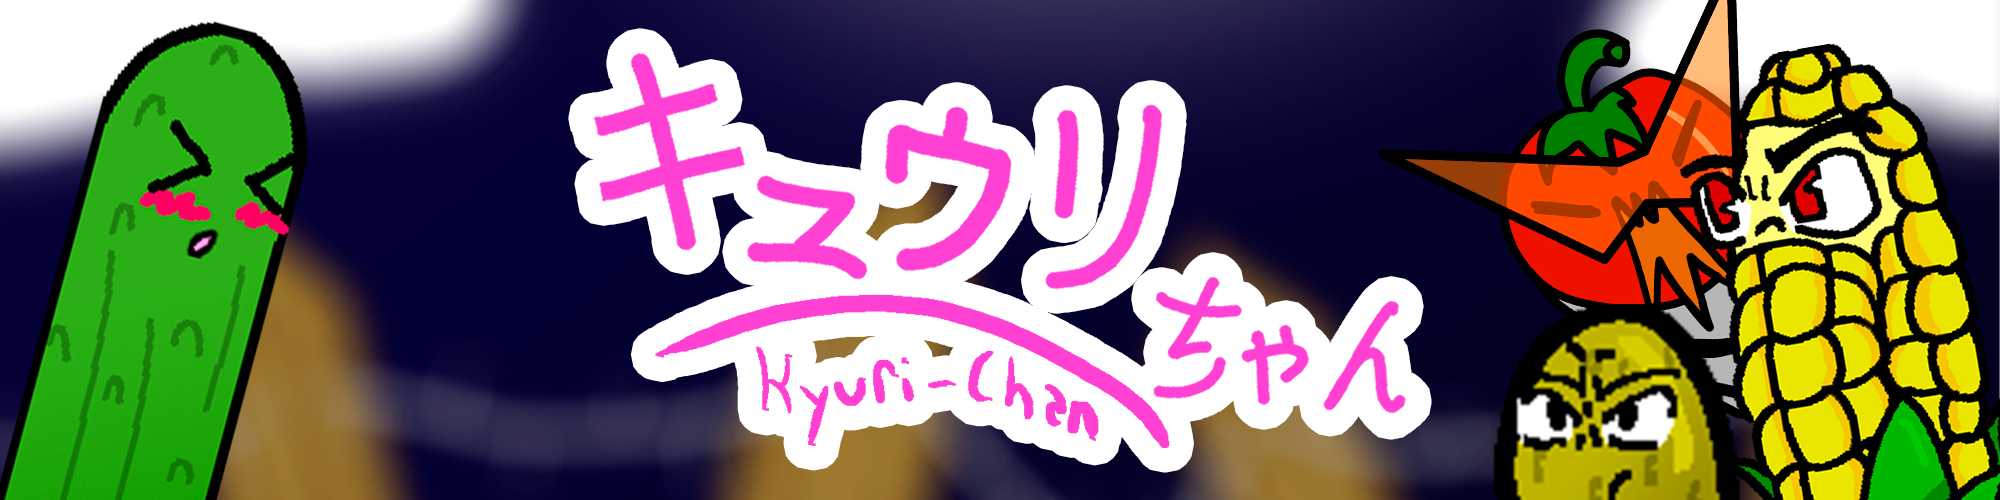 Kyuri-Chan